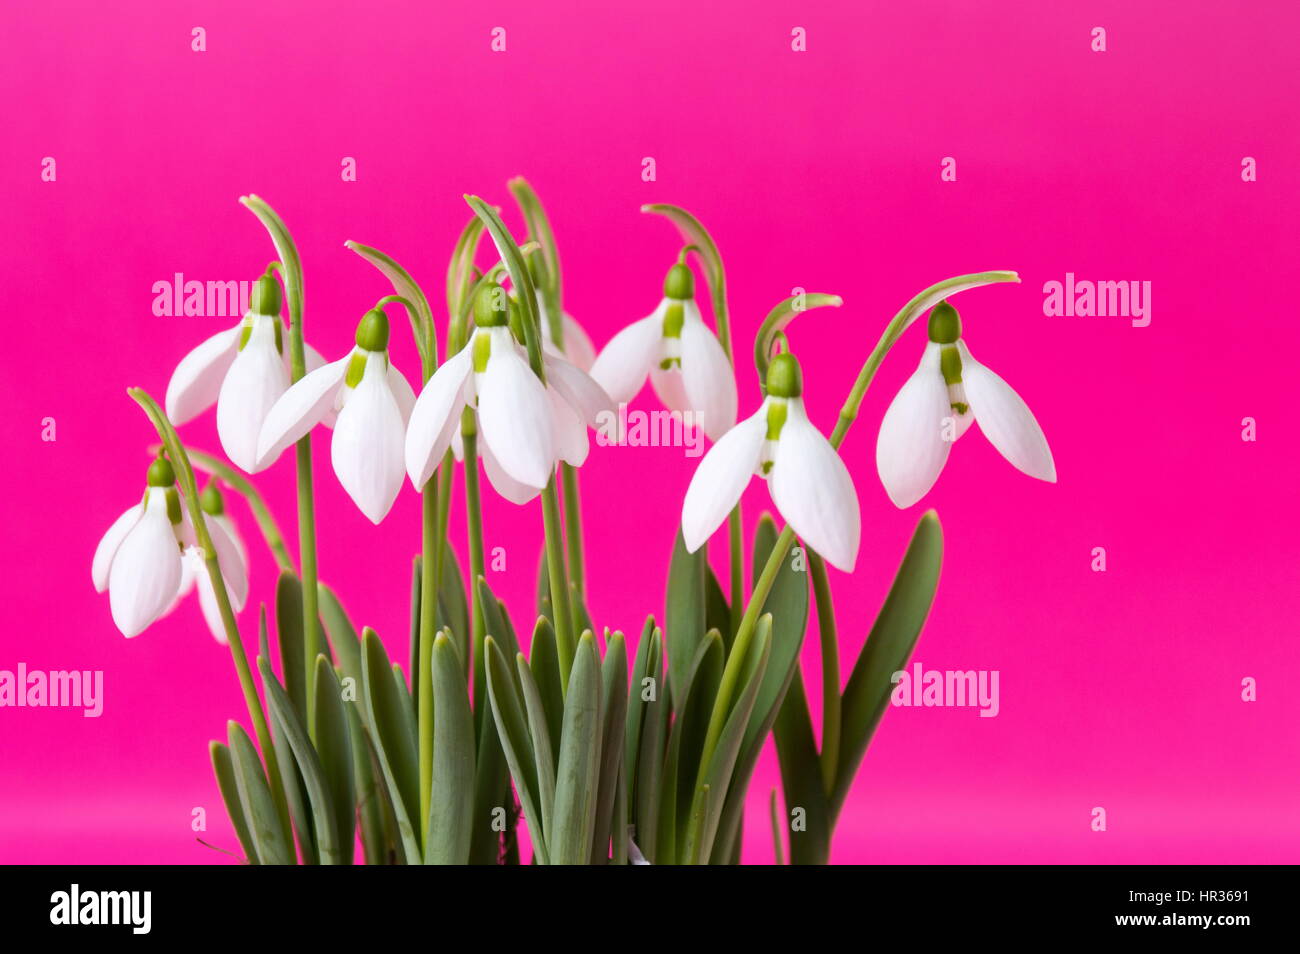 Fresh snowdrop flowers against pink uniform background Stock Photo